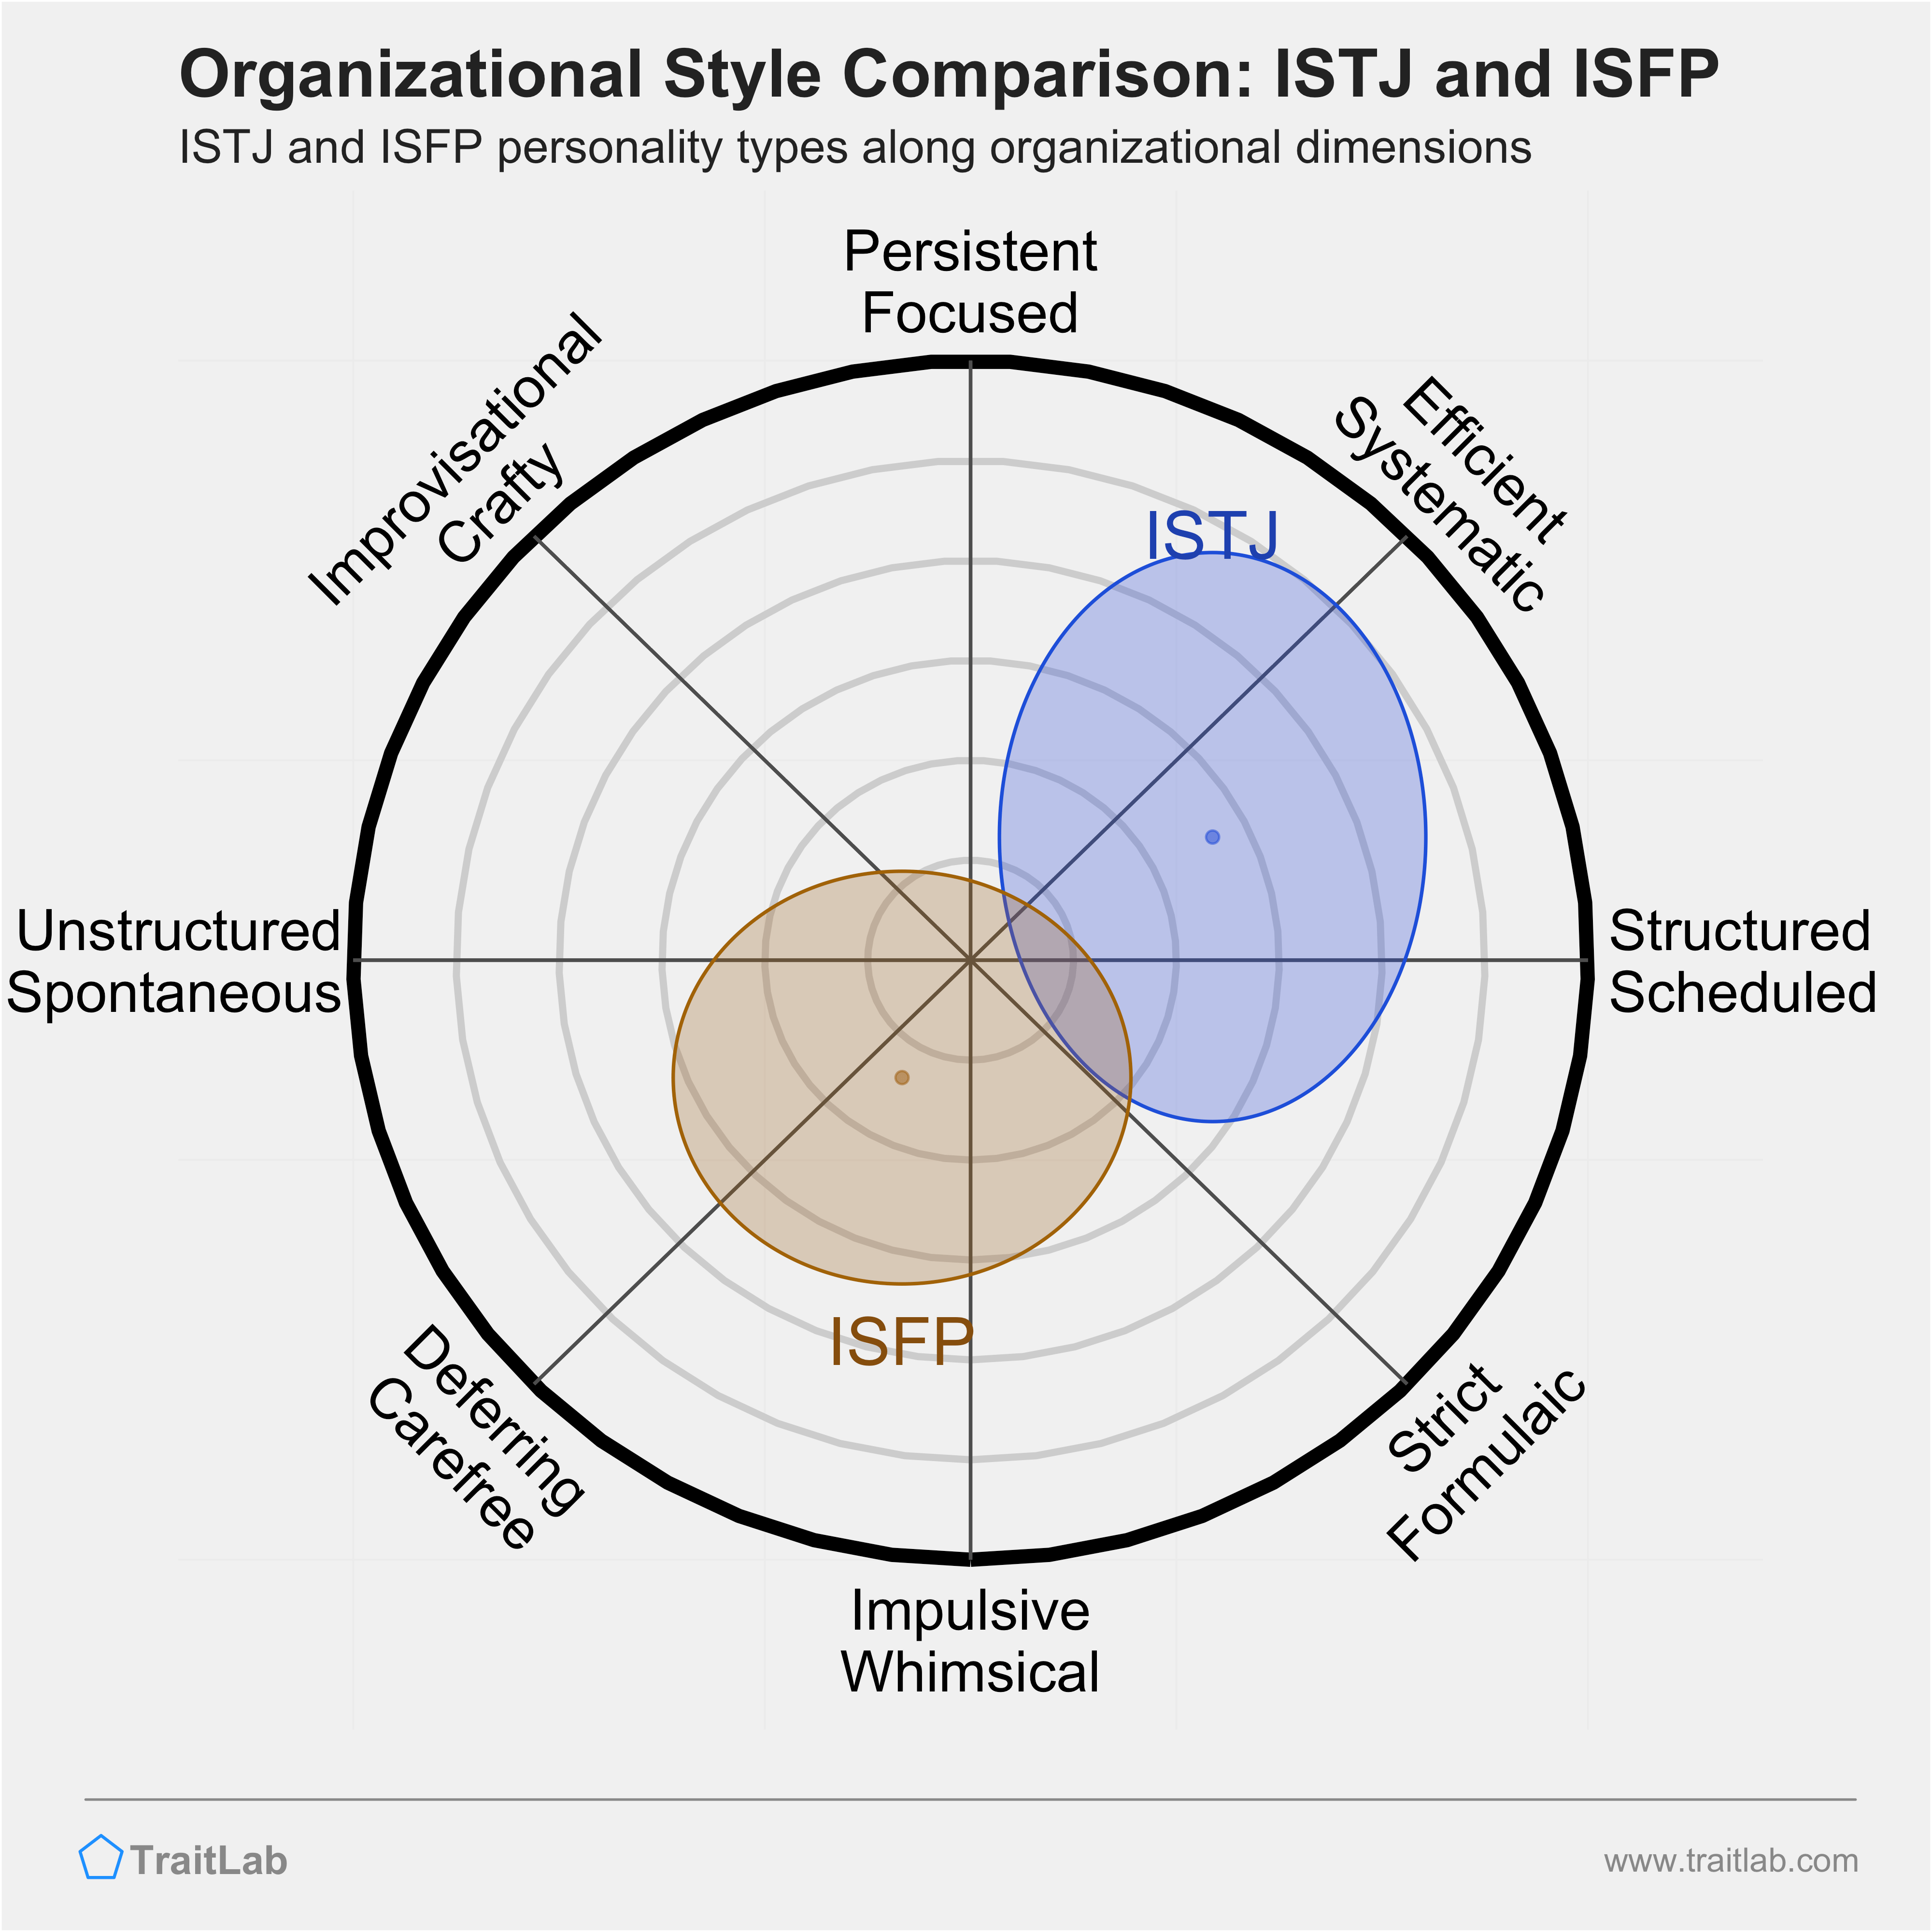 ISTJ and ISFP comparison across organizational dimensions